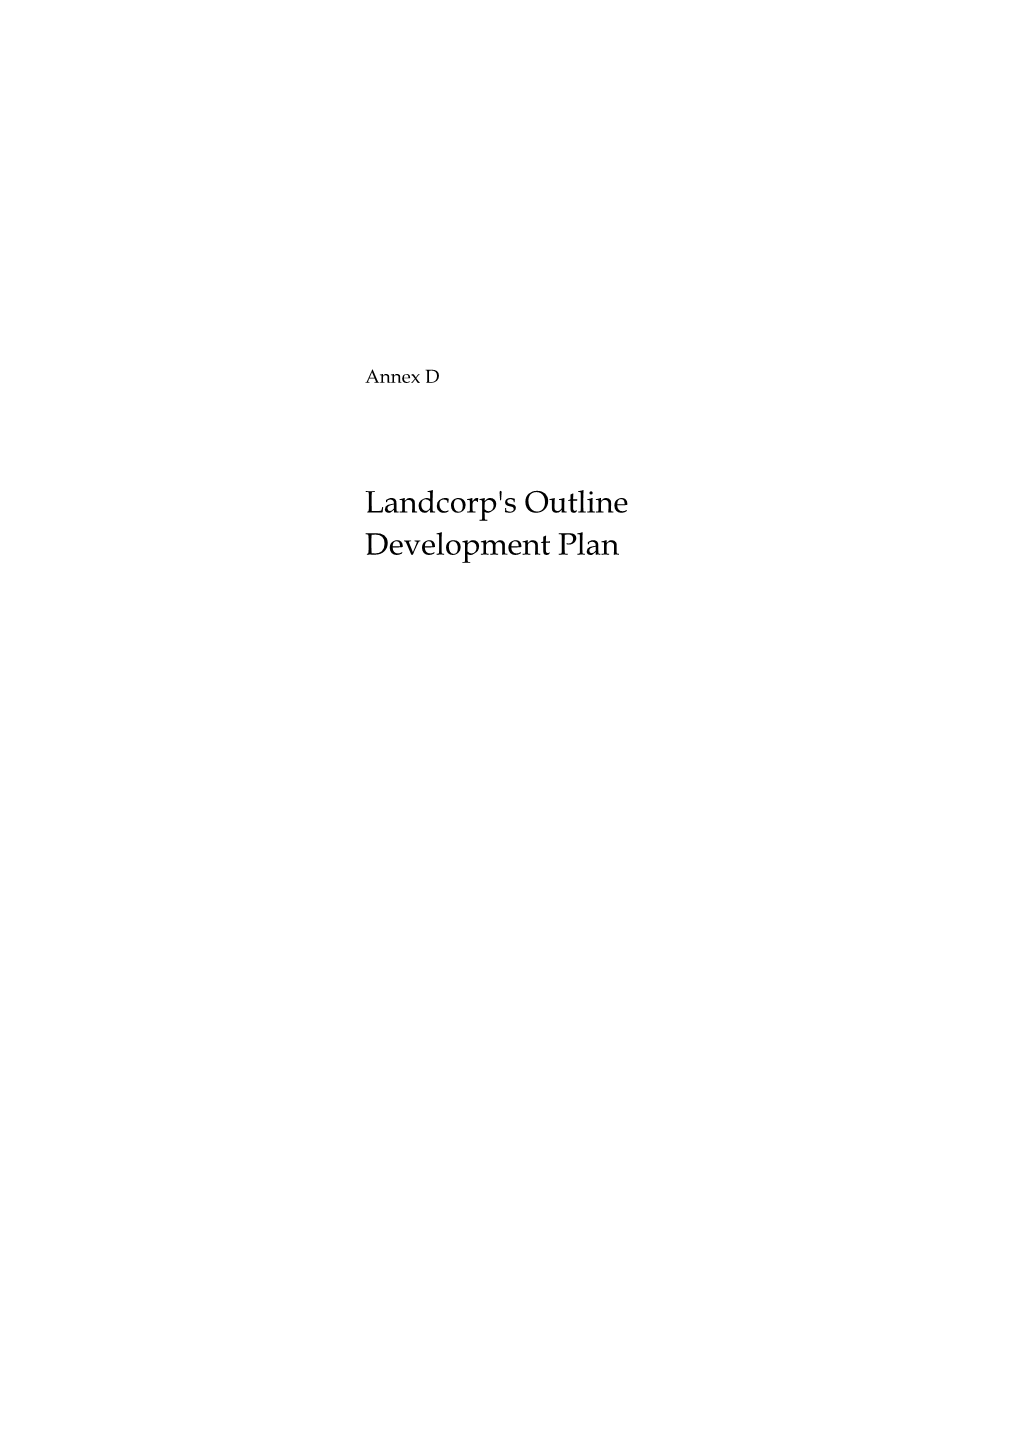 Landcorp's Outline Development Plan